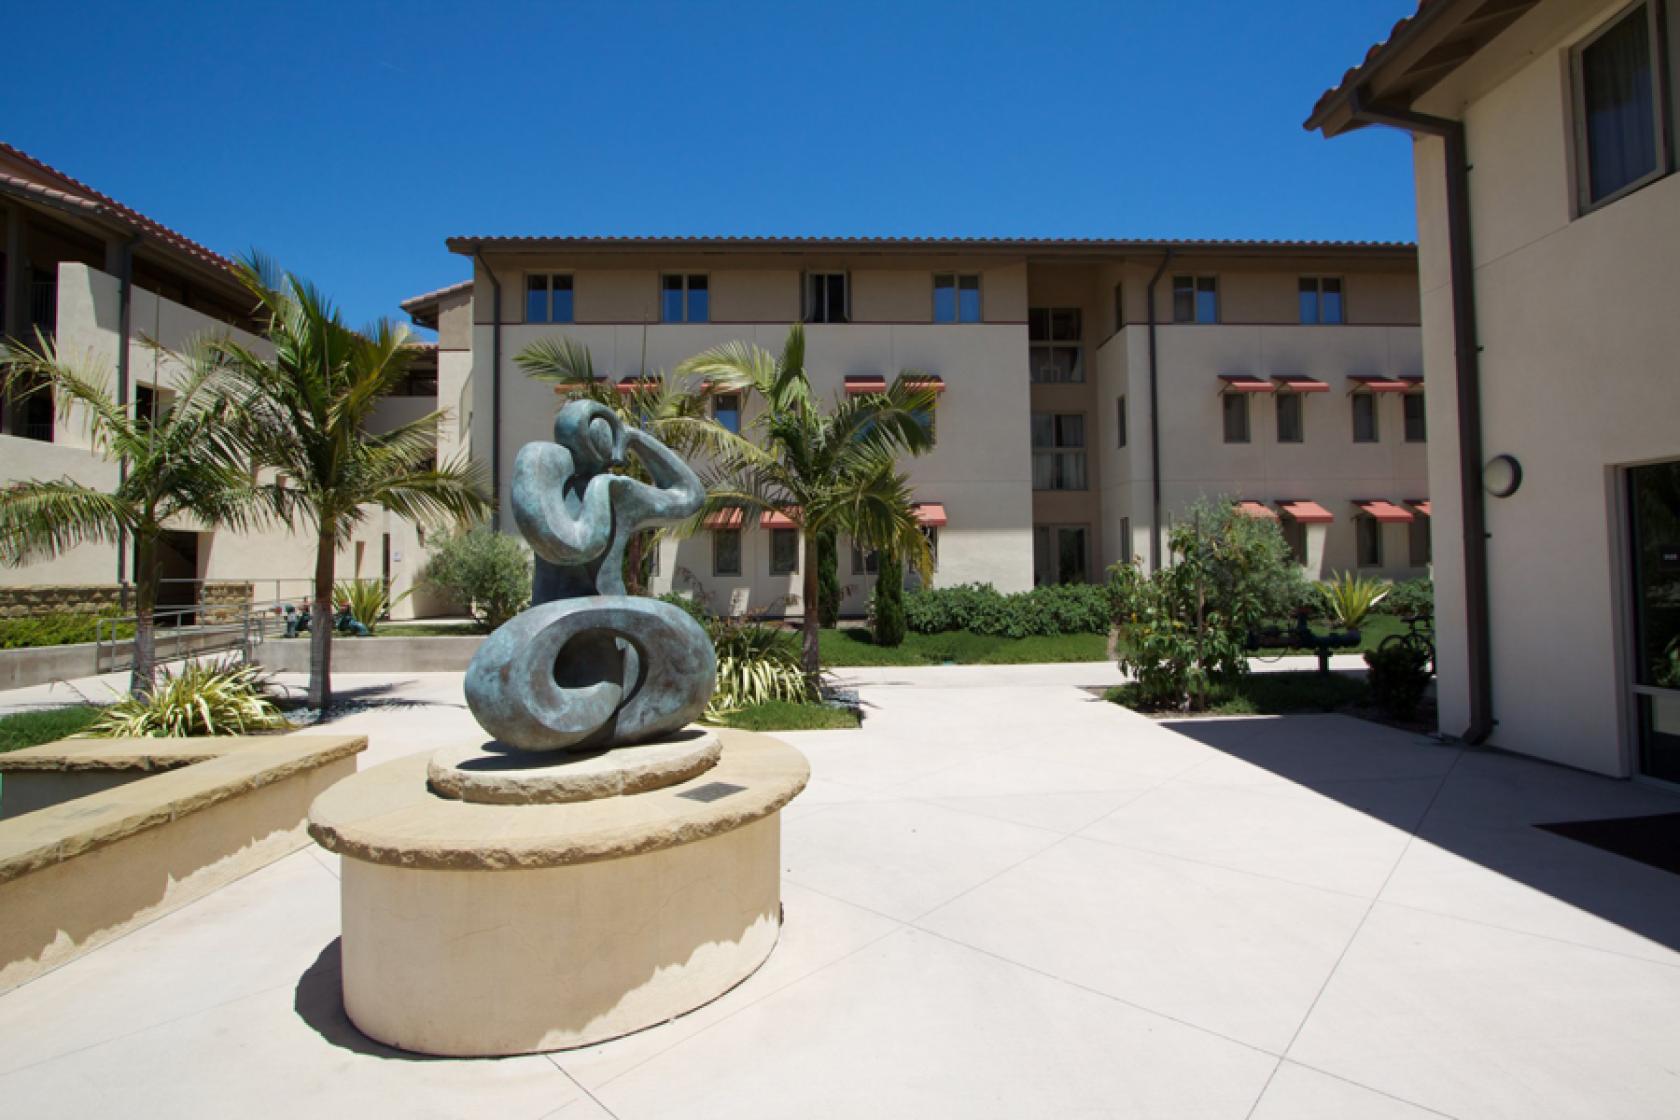 sculpture in the San Clemente Villages courtyard